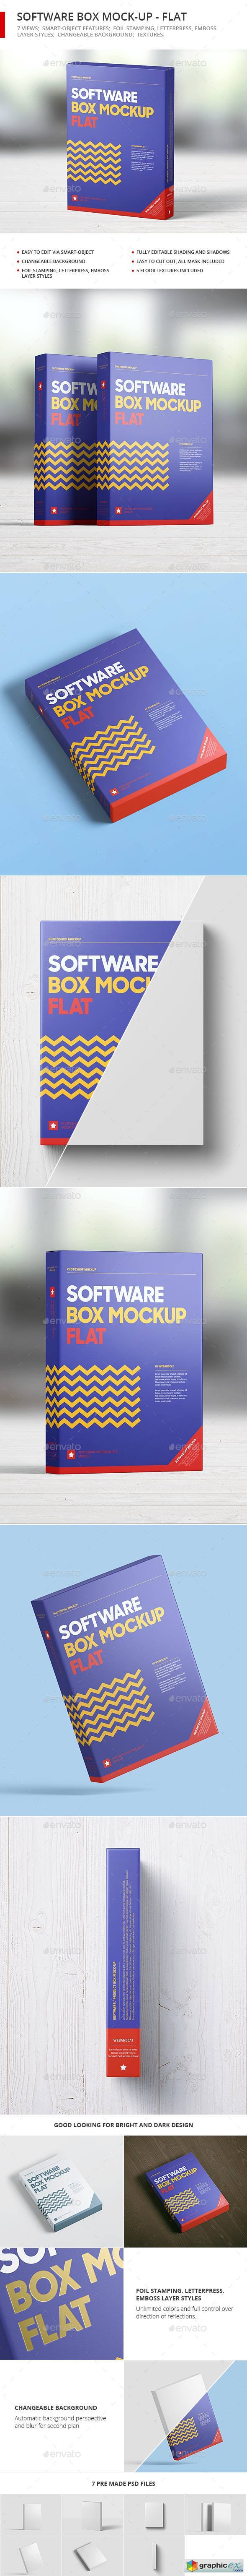 Software Box Mock-up - Flat